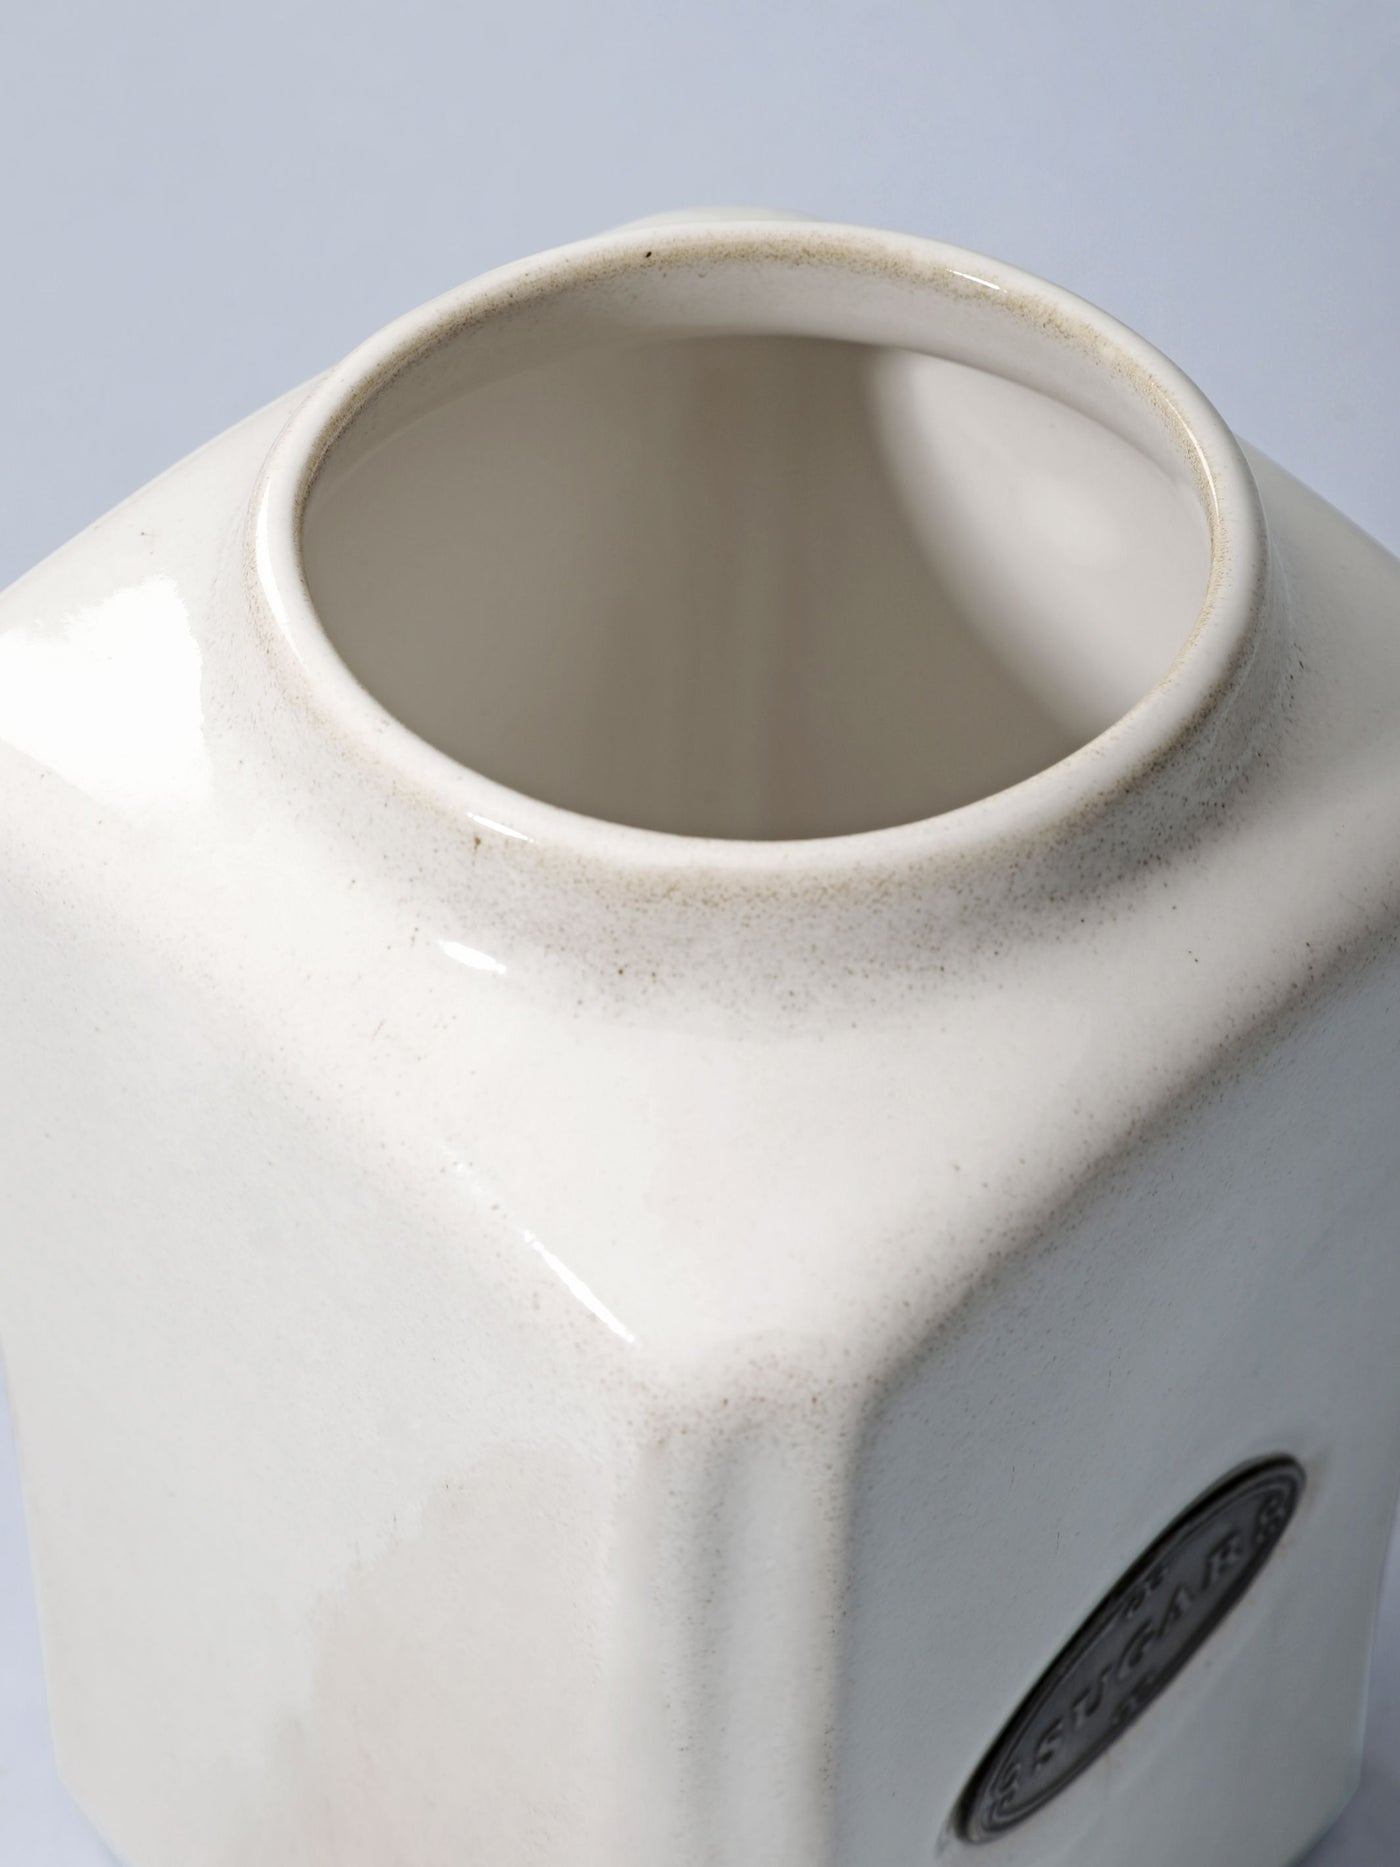 Handcrafted White Ceramic Jar